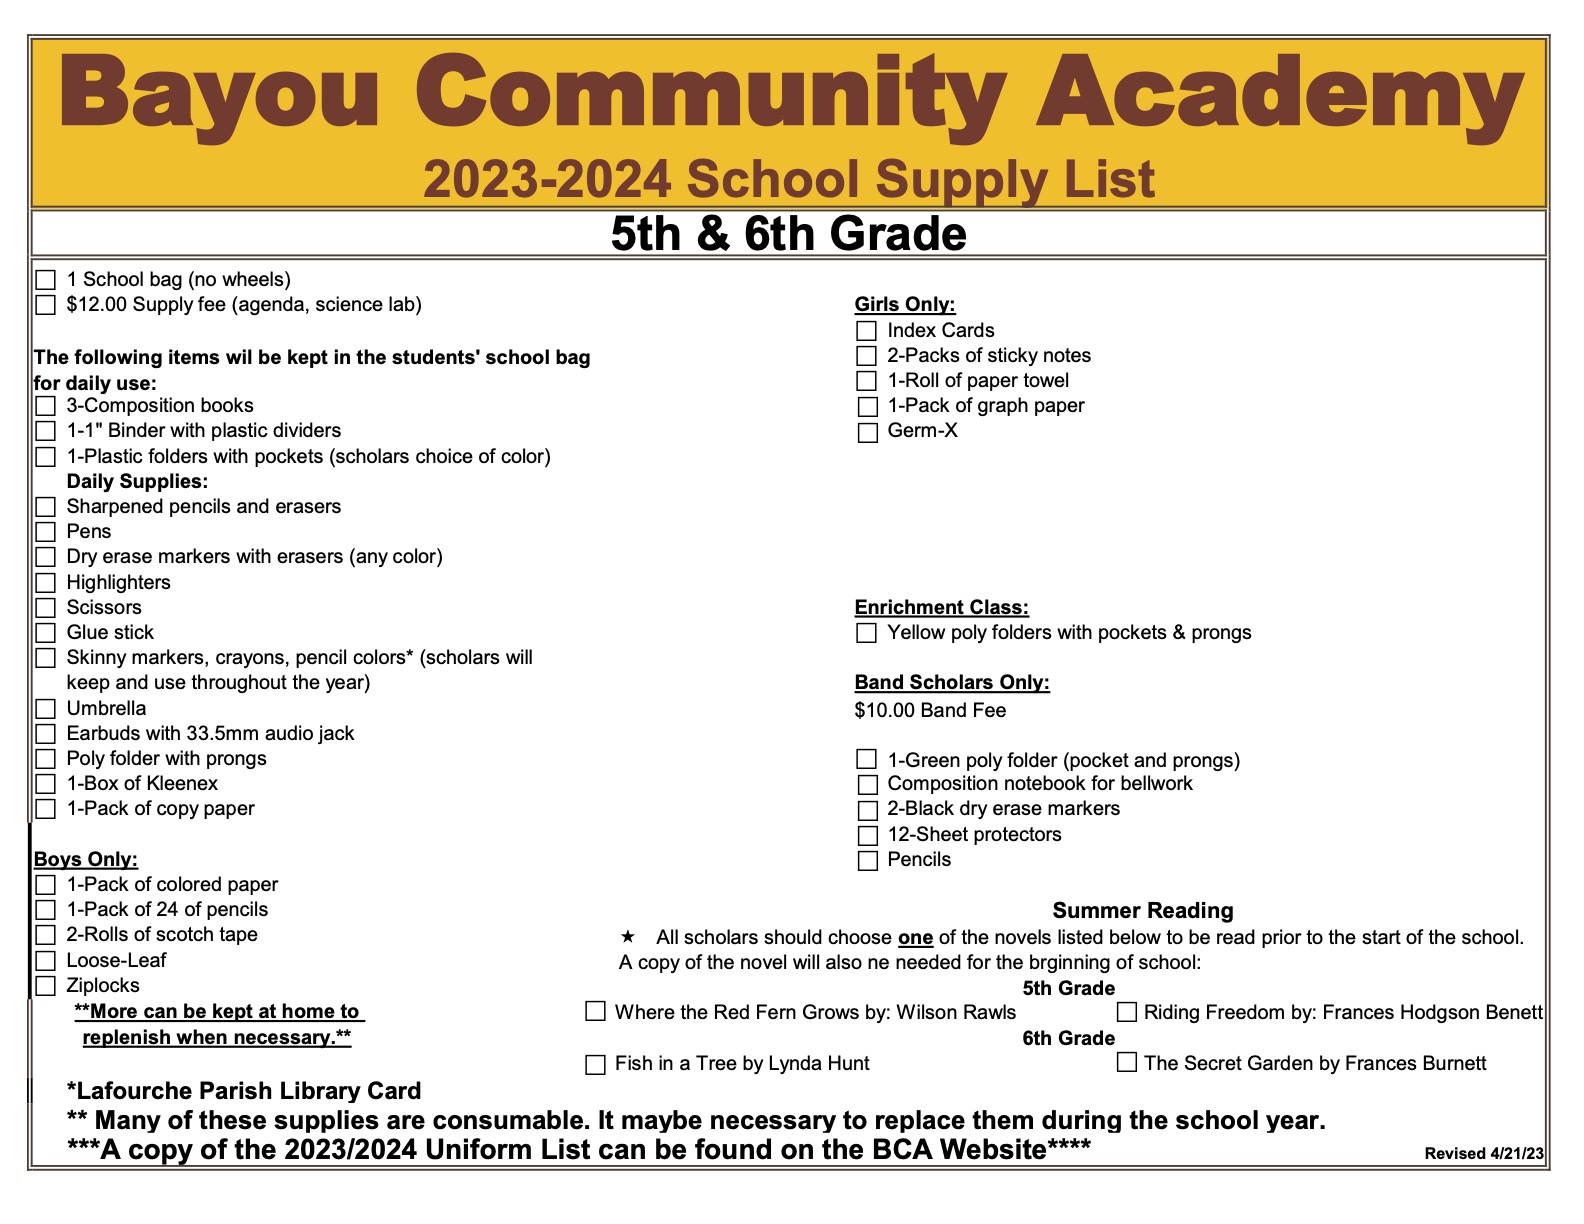 5th & 6th Grade Supply List